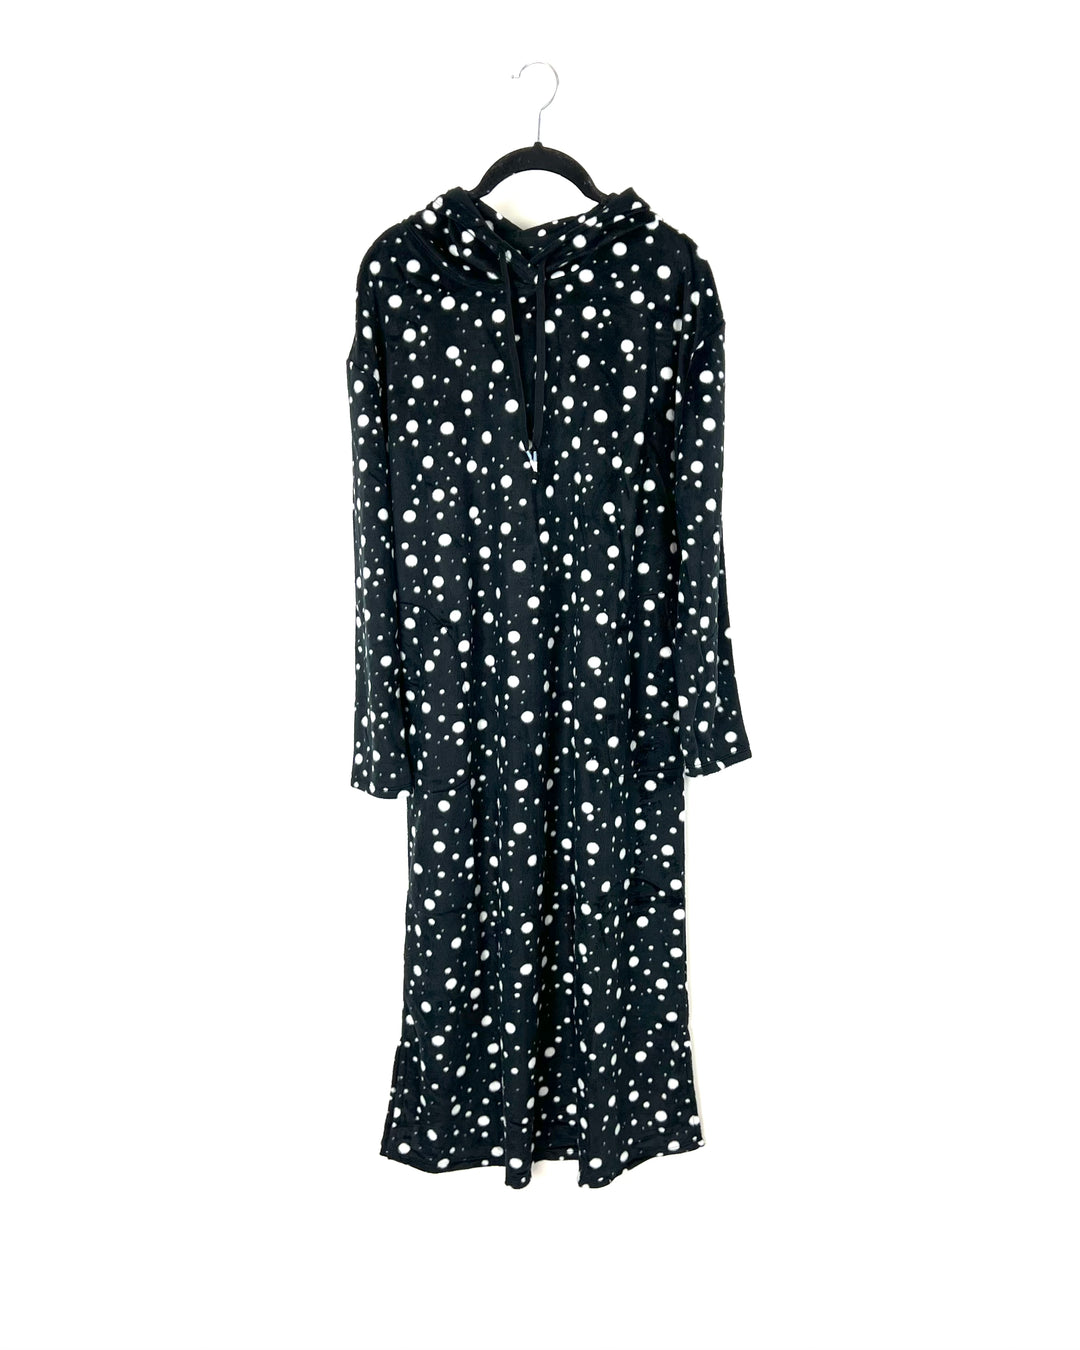 Black And White Polkadot Nightgown - Size 6/8